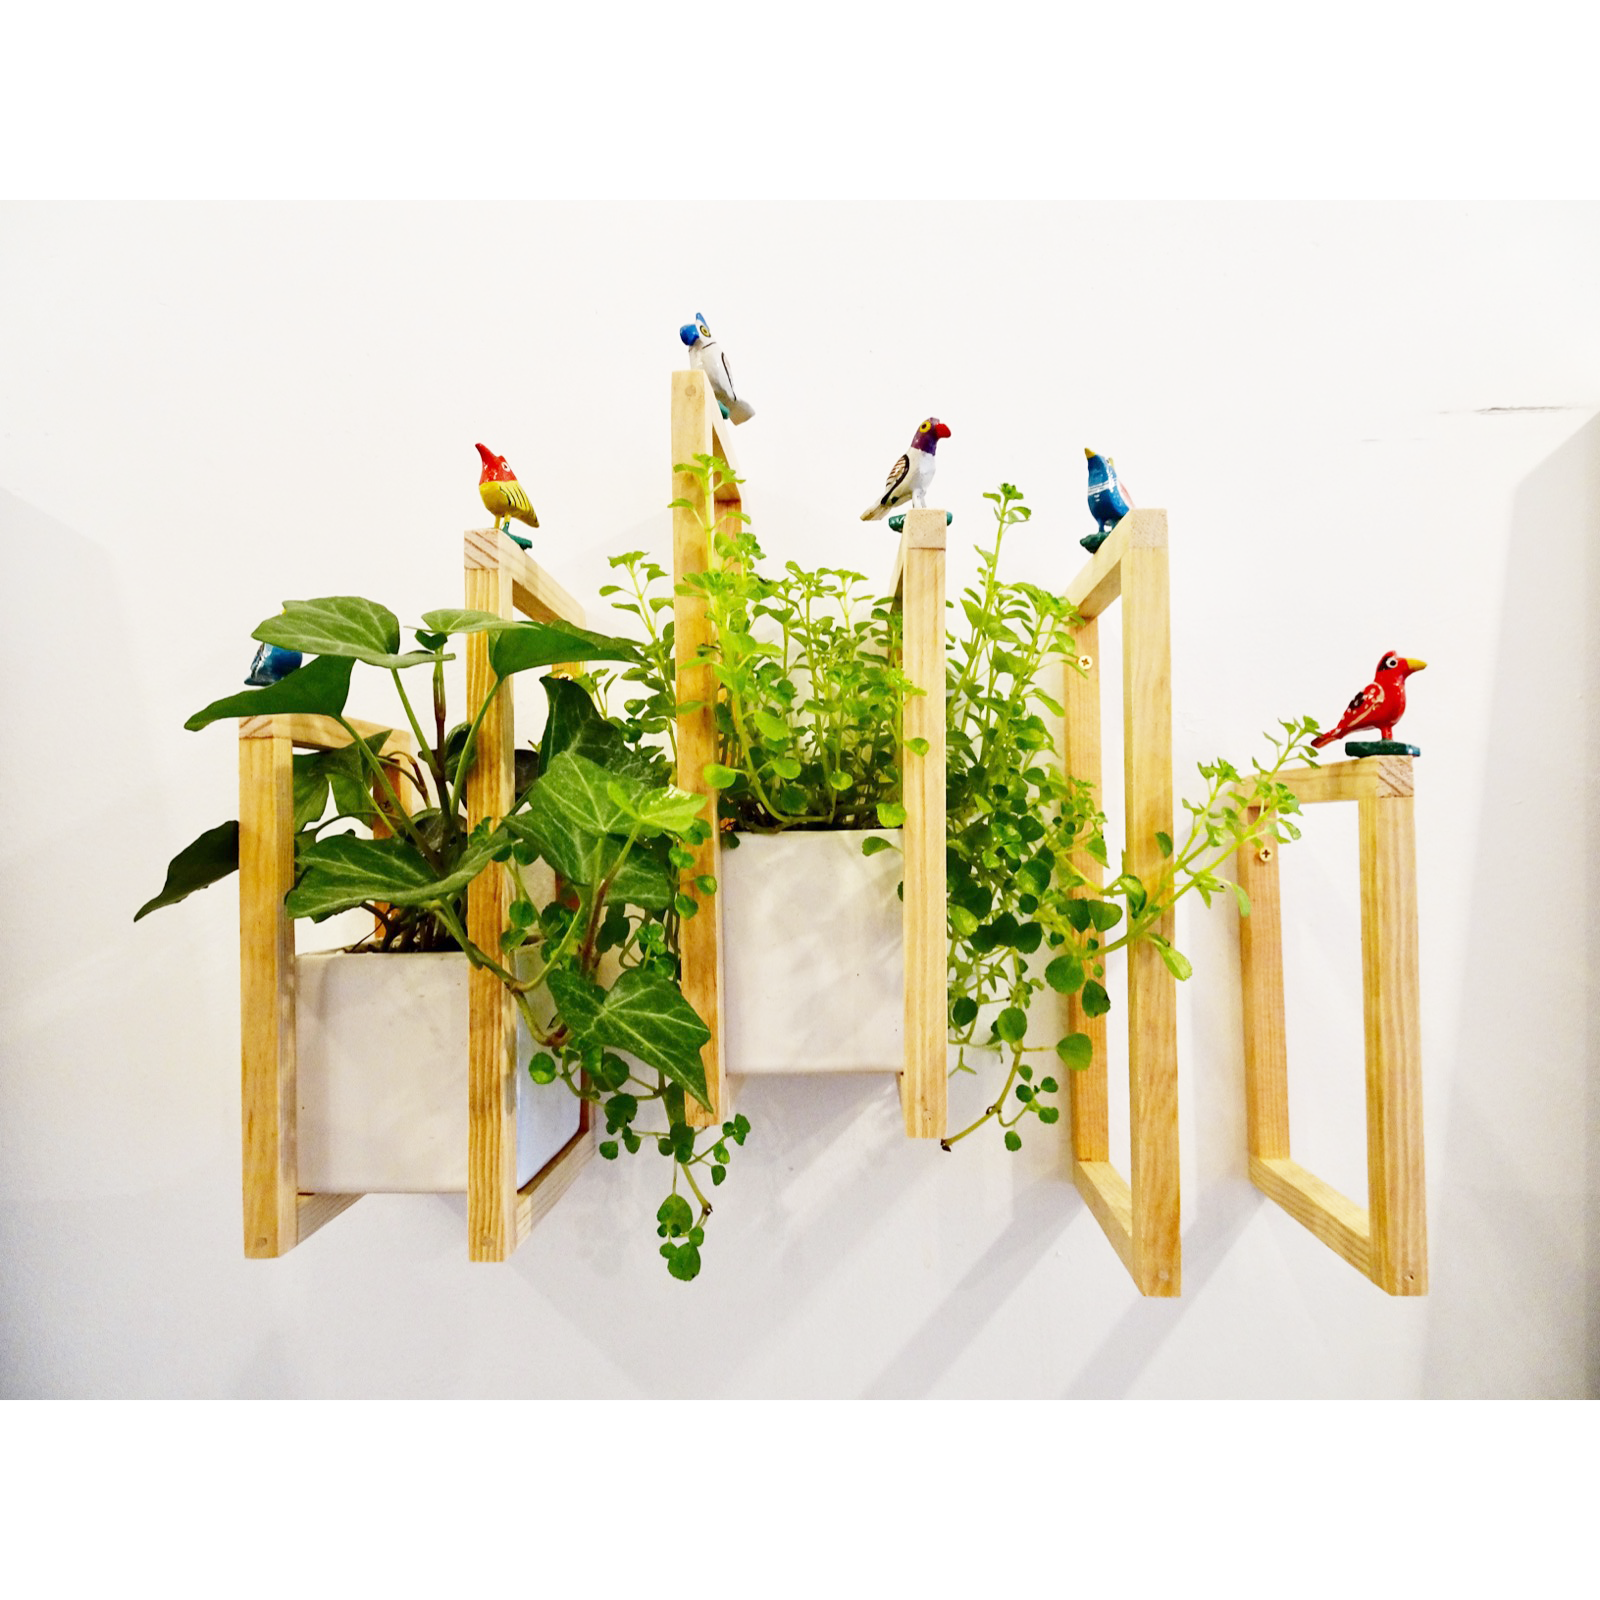 Wall Mounted Planter with Frames by Non Matsuura